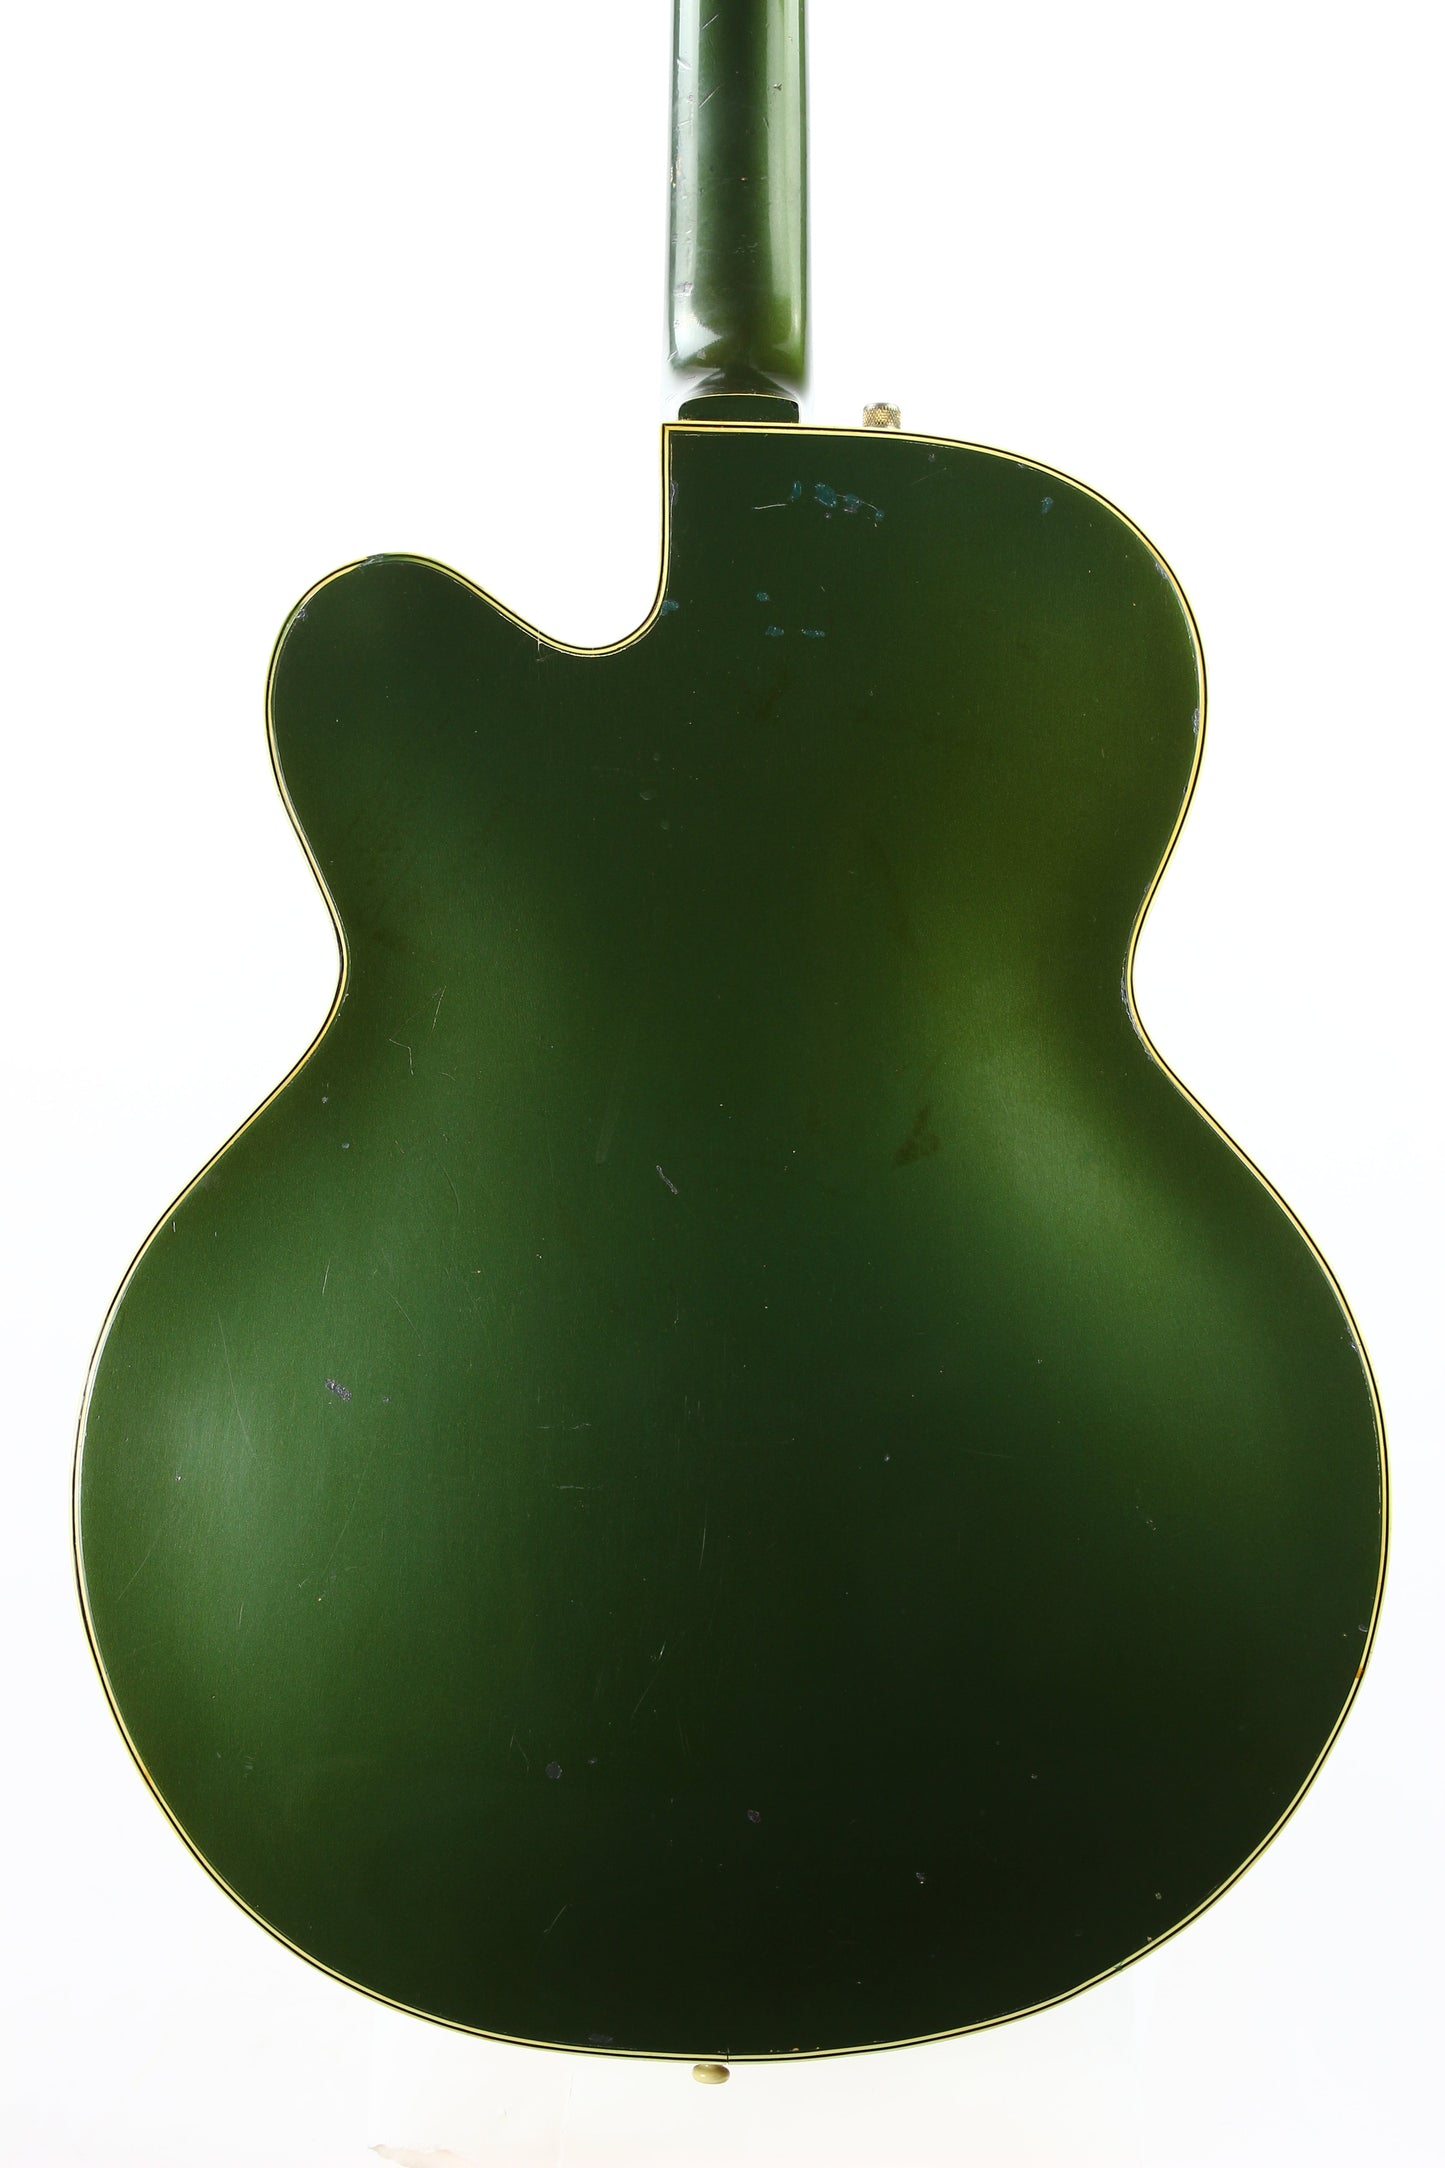 1957 Gretsch 6196 Country Club CADILLAC GREEN - Dearmond Pickups, white falcon size hollowbody guitar